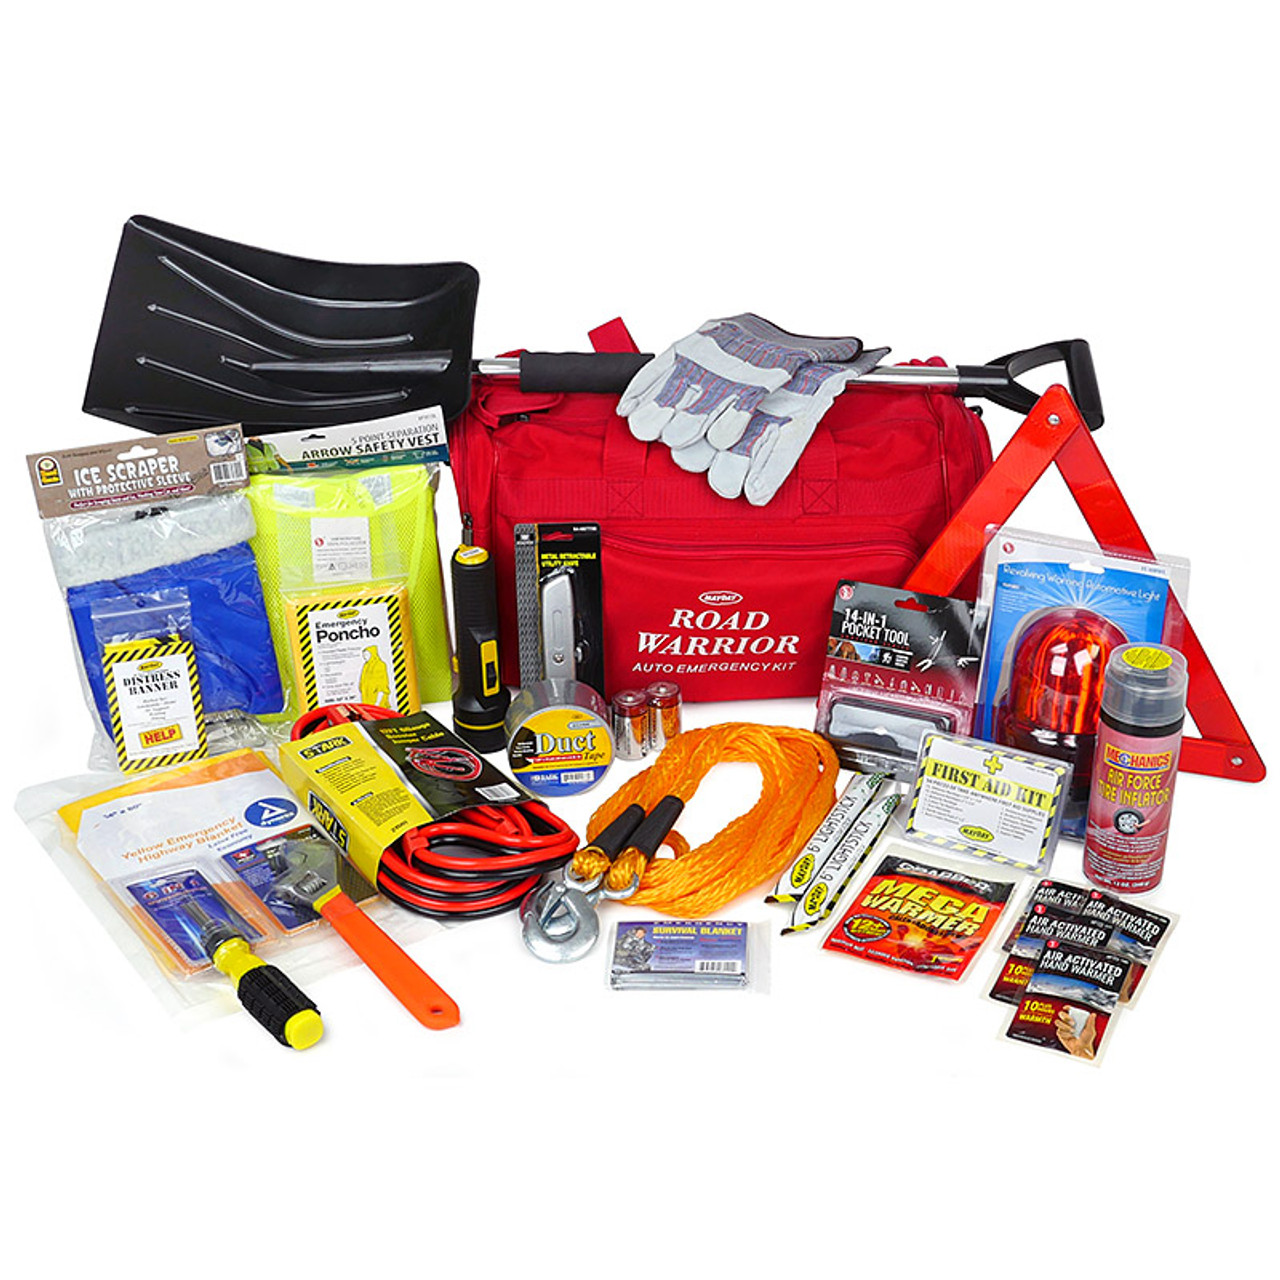 Survival Gear - 1 Person Emergency Survival Kit Top Car Winter Survival Kit